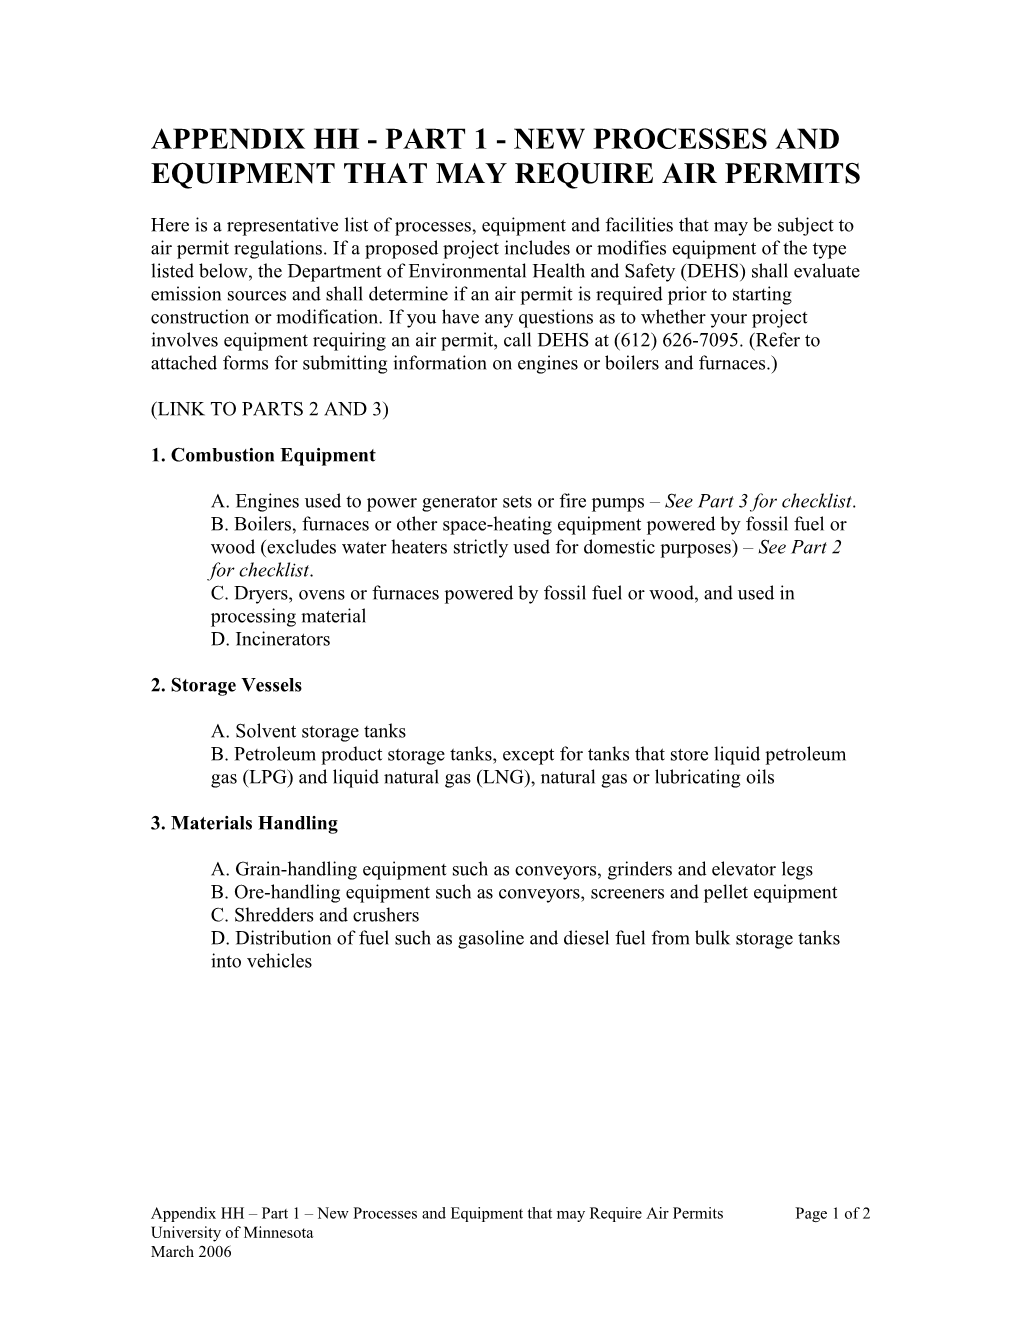 Appendix Hh - Part I - New Processes and Equipment That May Require Air Permits